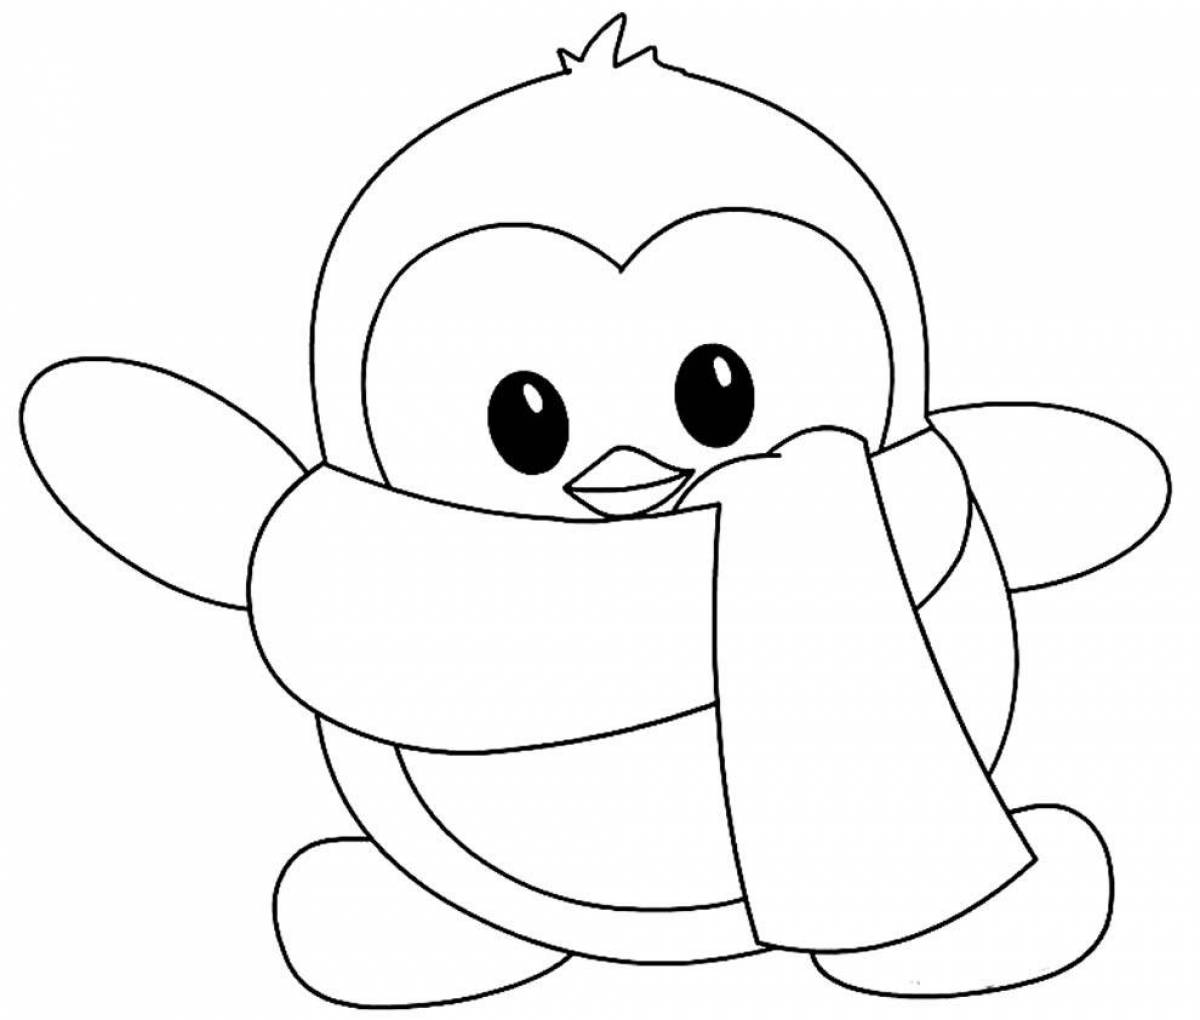 Joyful penguin coloring pages for kids